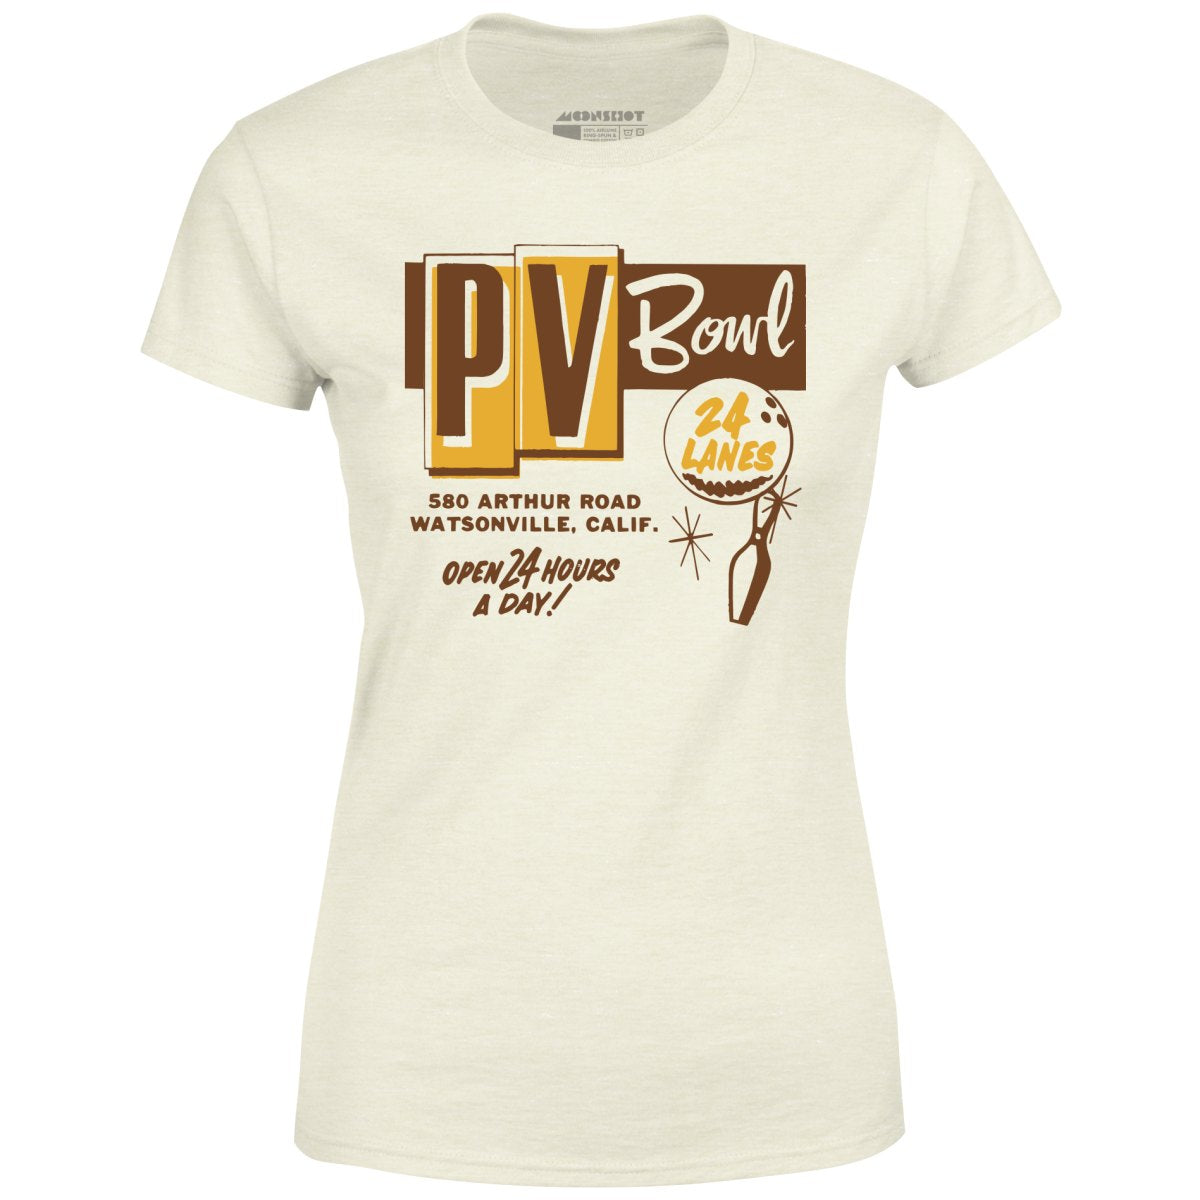 PV Bowl - Watsonville, CA - Vintage Bowling Alley - Women's T-Shirt ...